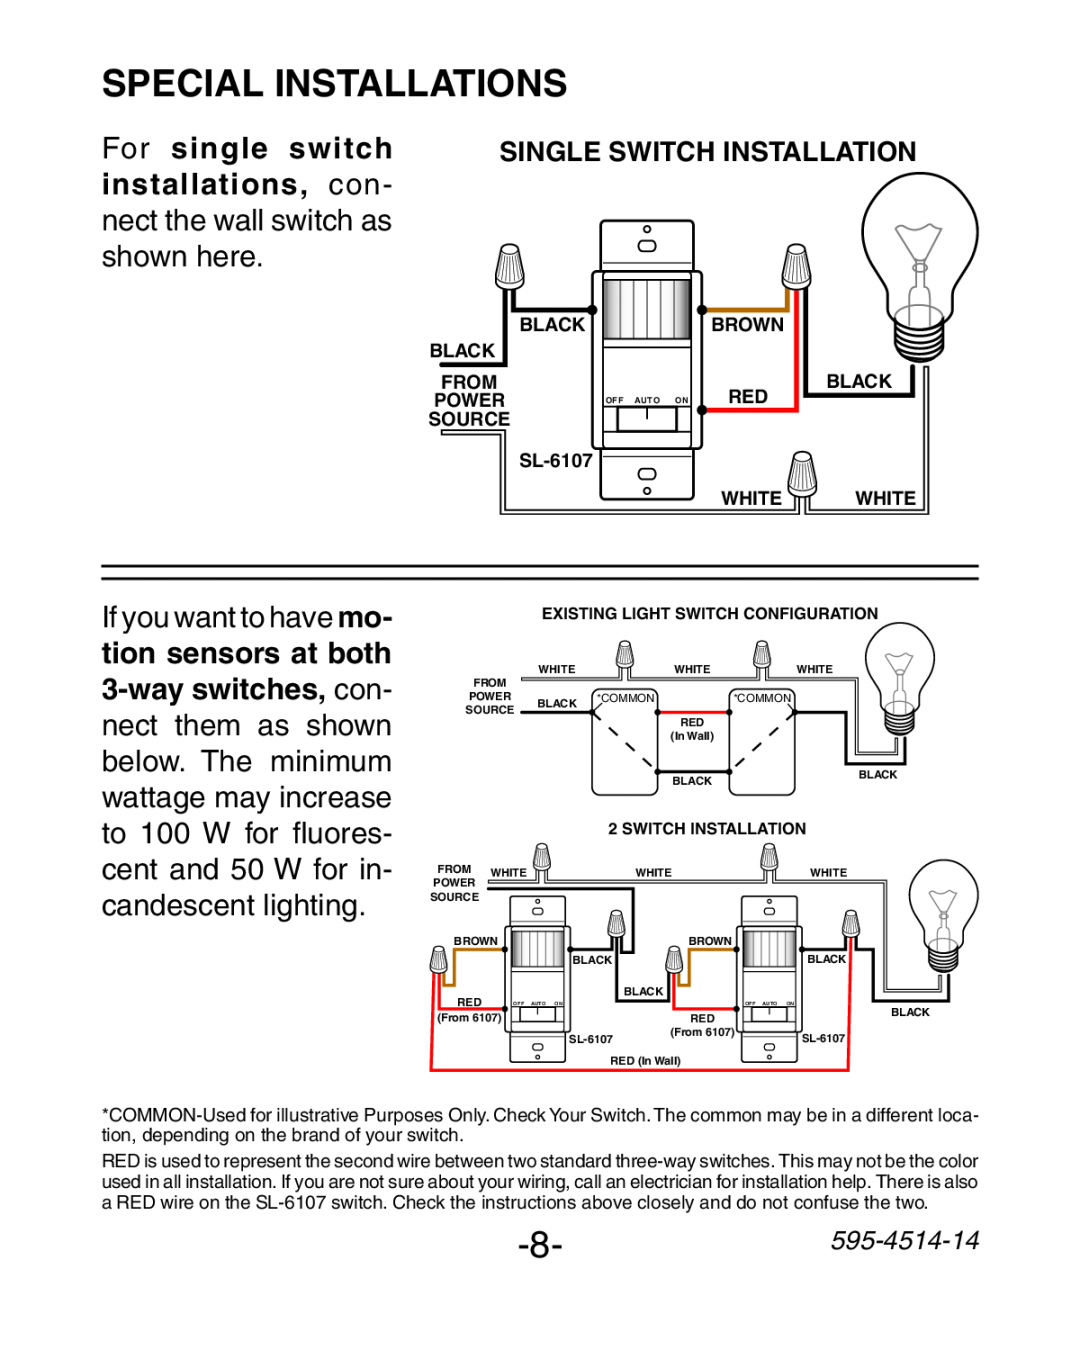 Heath Zenith SL-6107 Special Installations, Single Switch Installation, 595-4514-14, Black Brown, From, Source, Power 